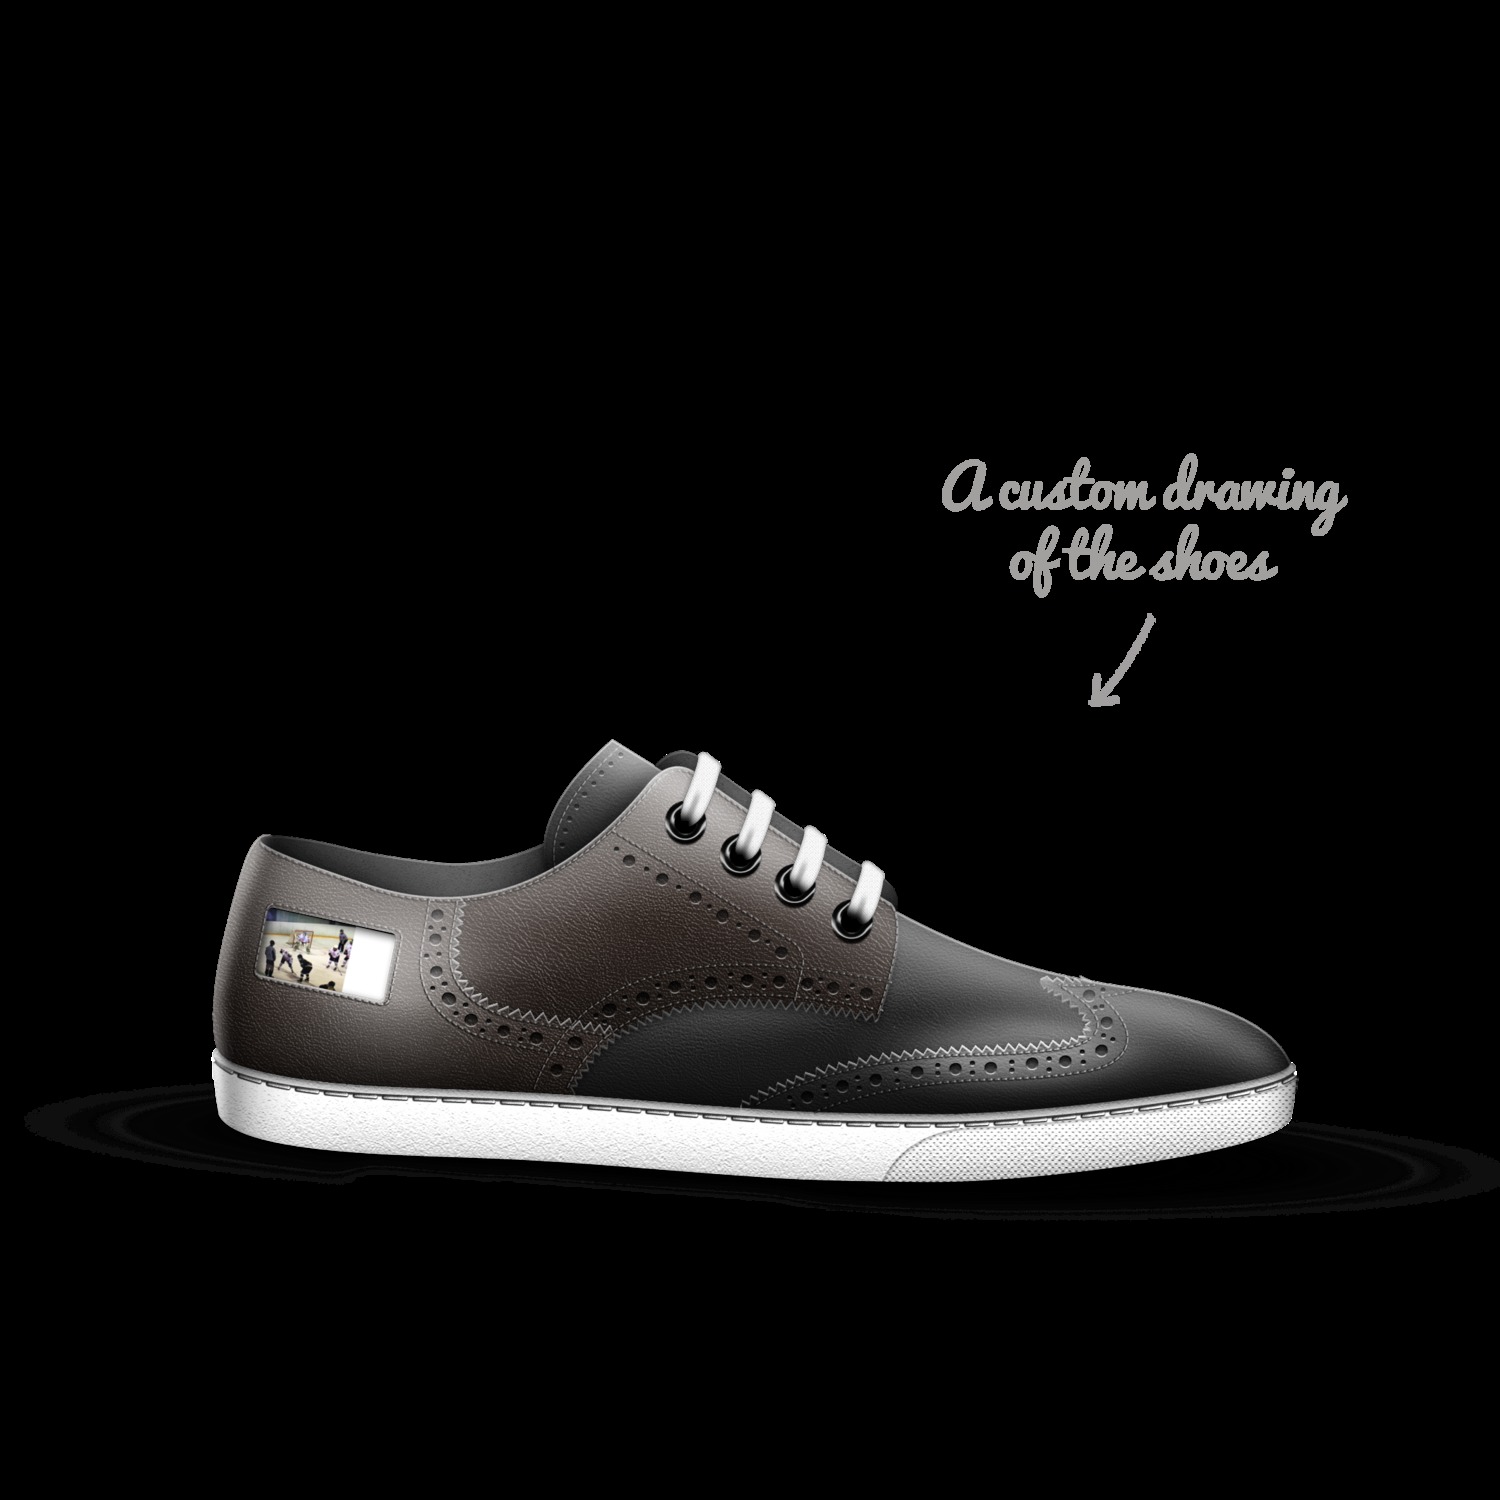 Johan | A Custom Shoe concept by Johan Sørensen